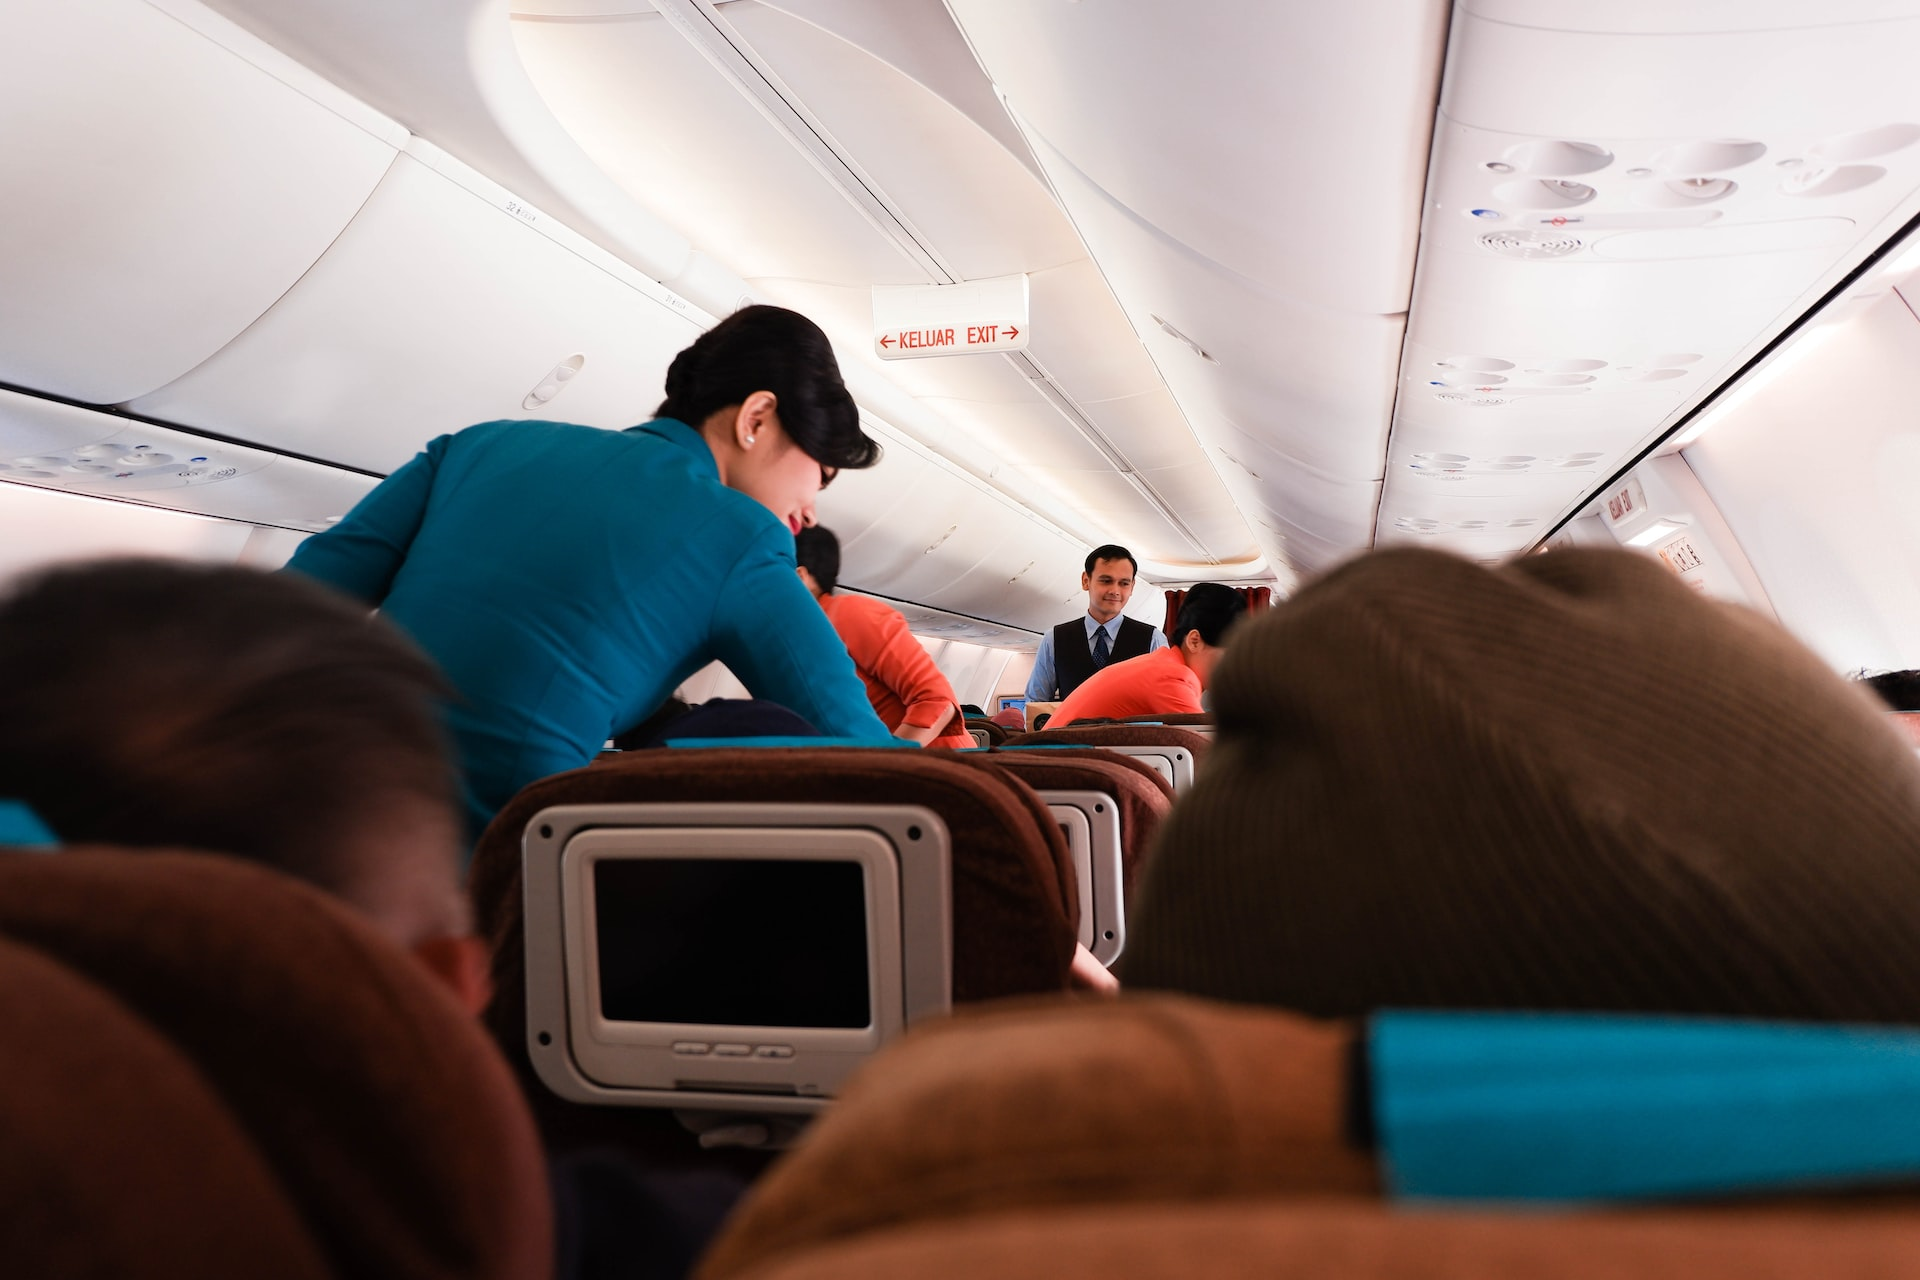 Flight attendant during a cruising flight phase serving passengers on board.